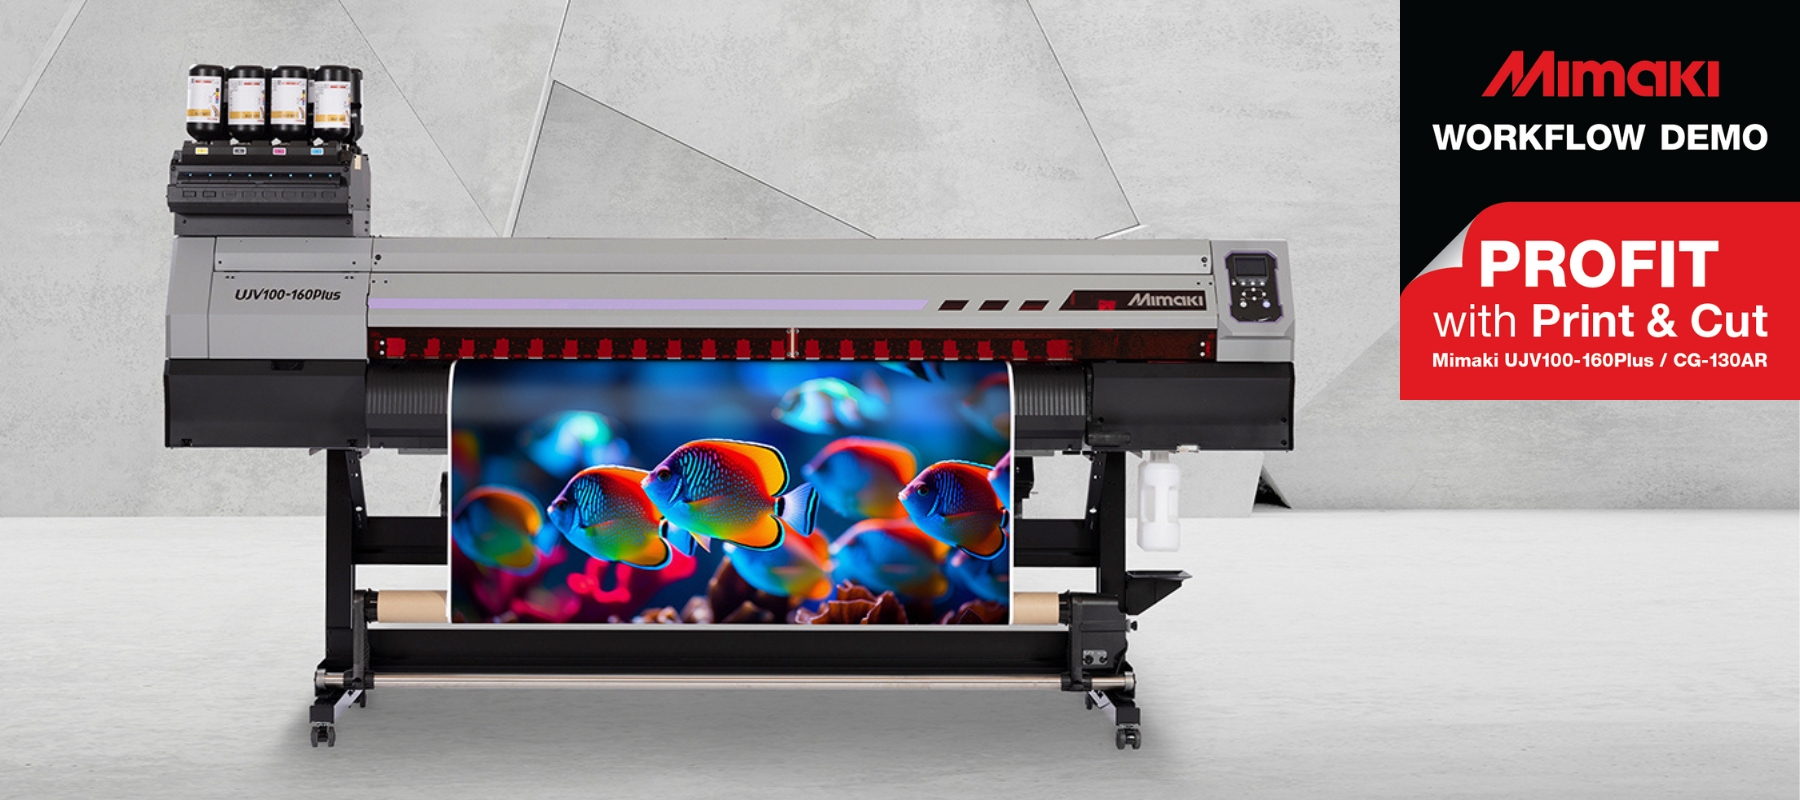 Profit with Print & Cut event banner featuring Mimaki UJV100-160Plus printer